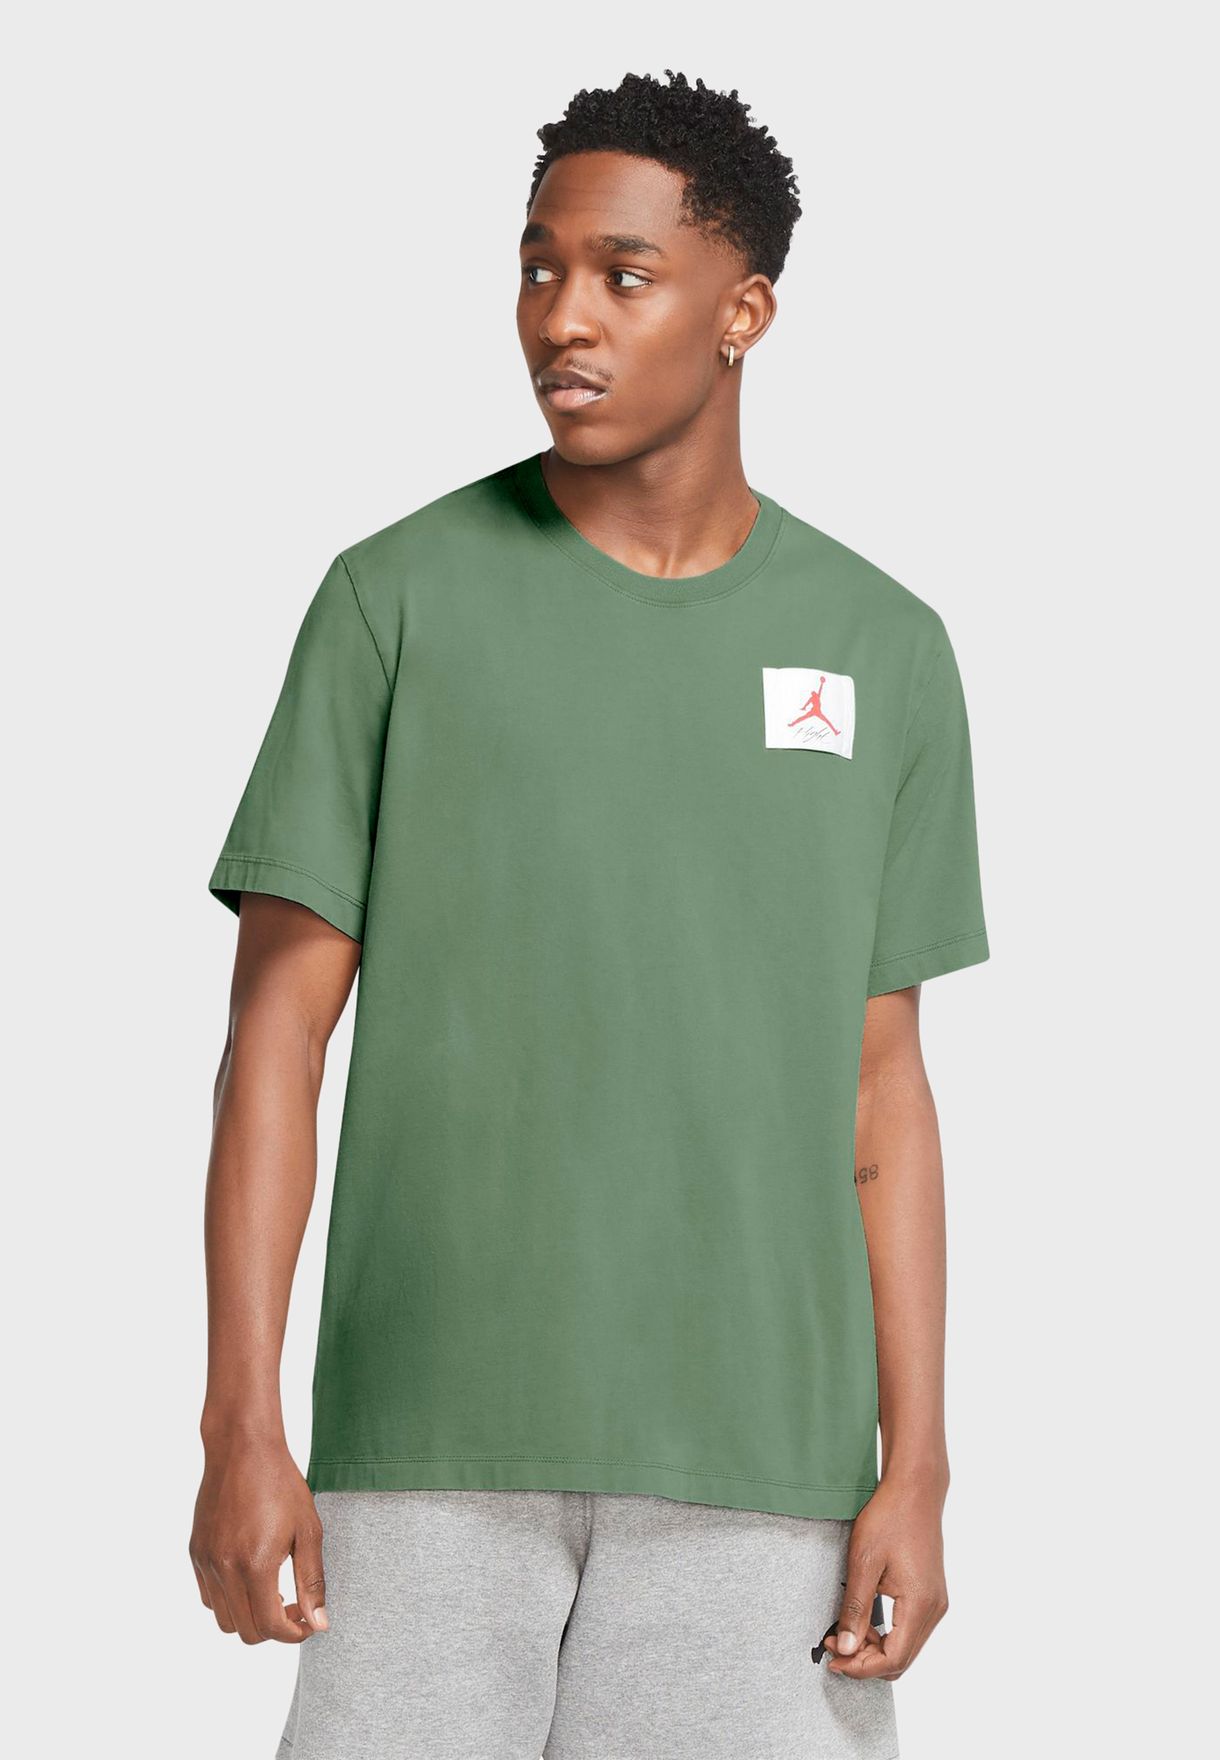 jordan shirt green